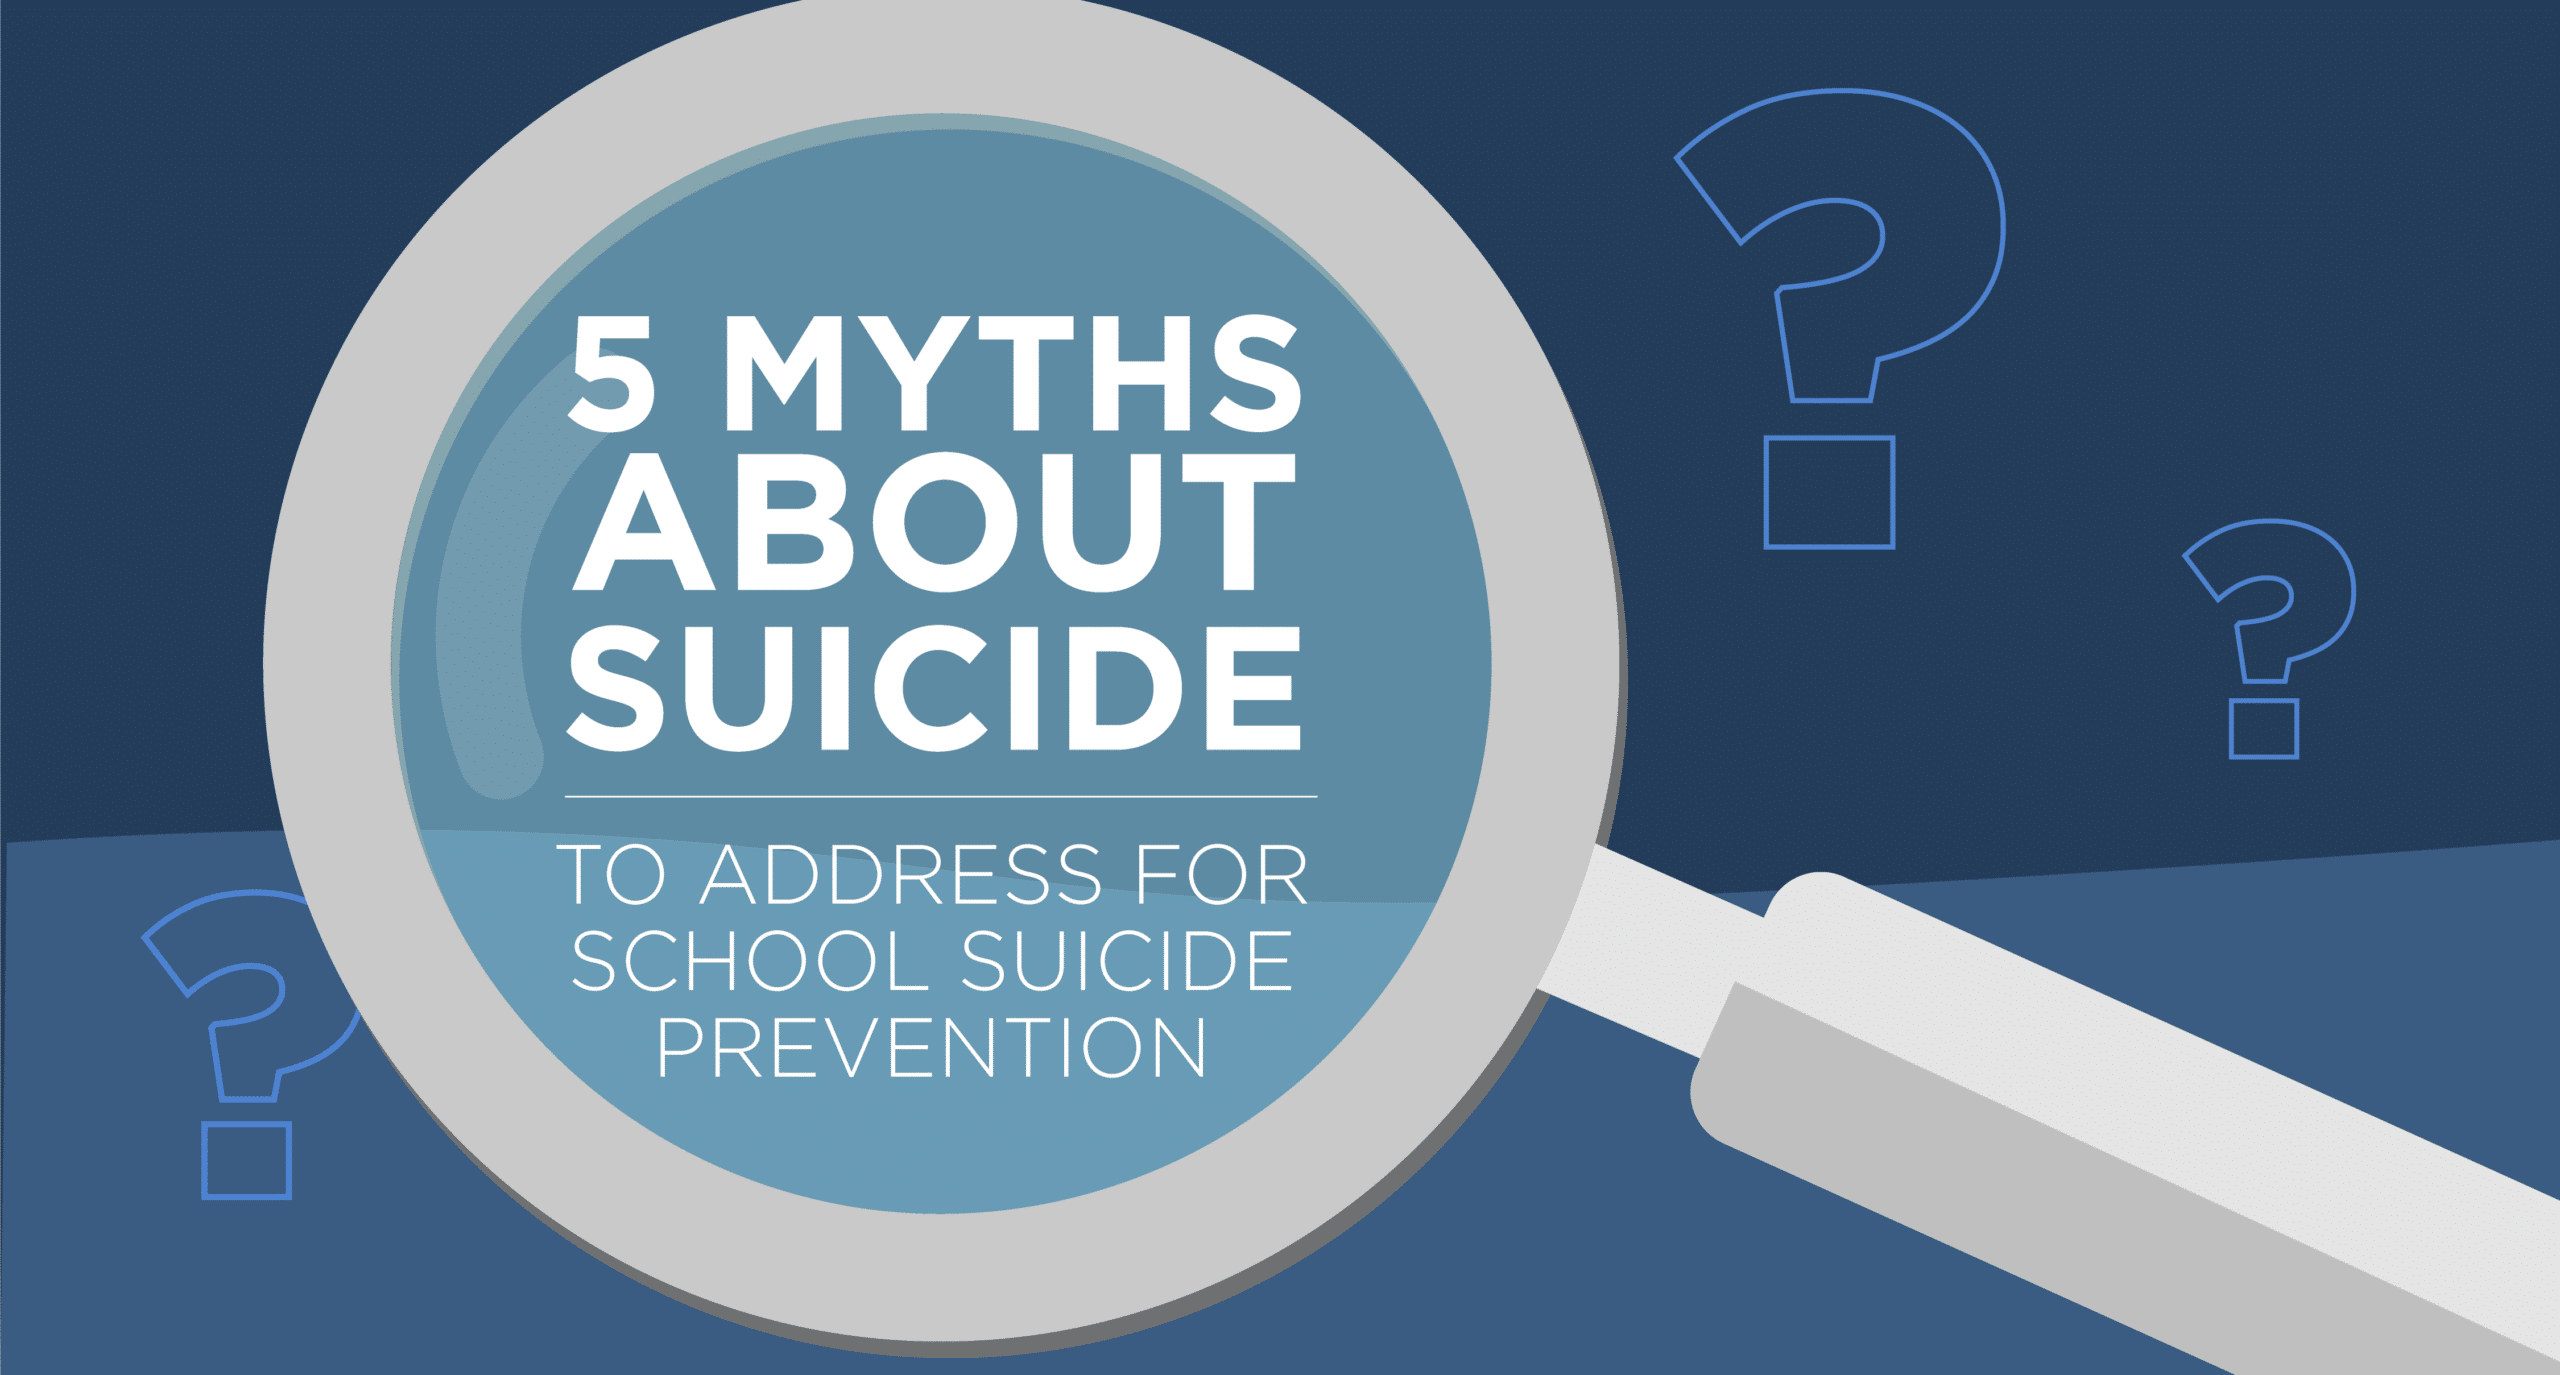 Suicide myths